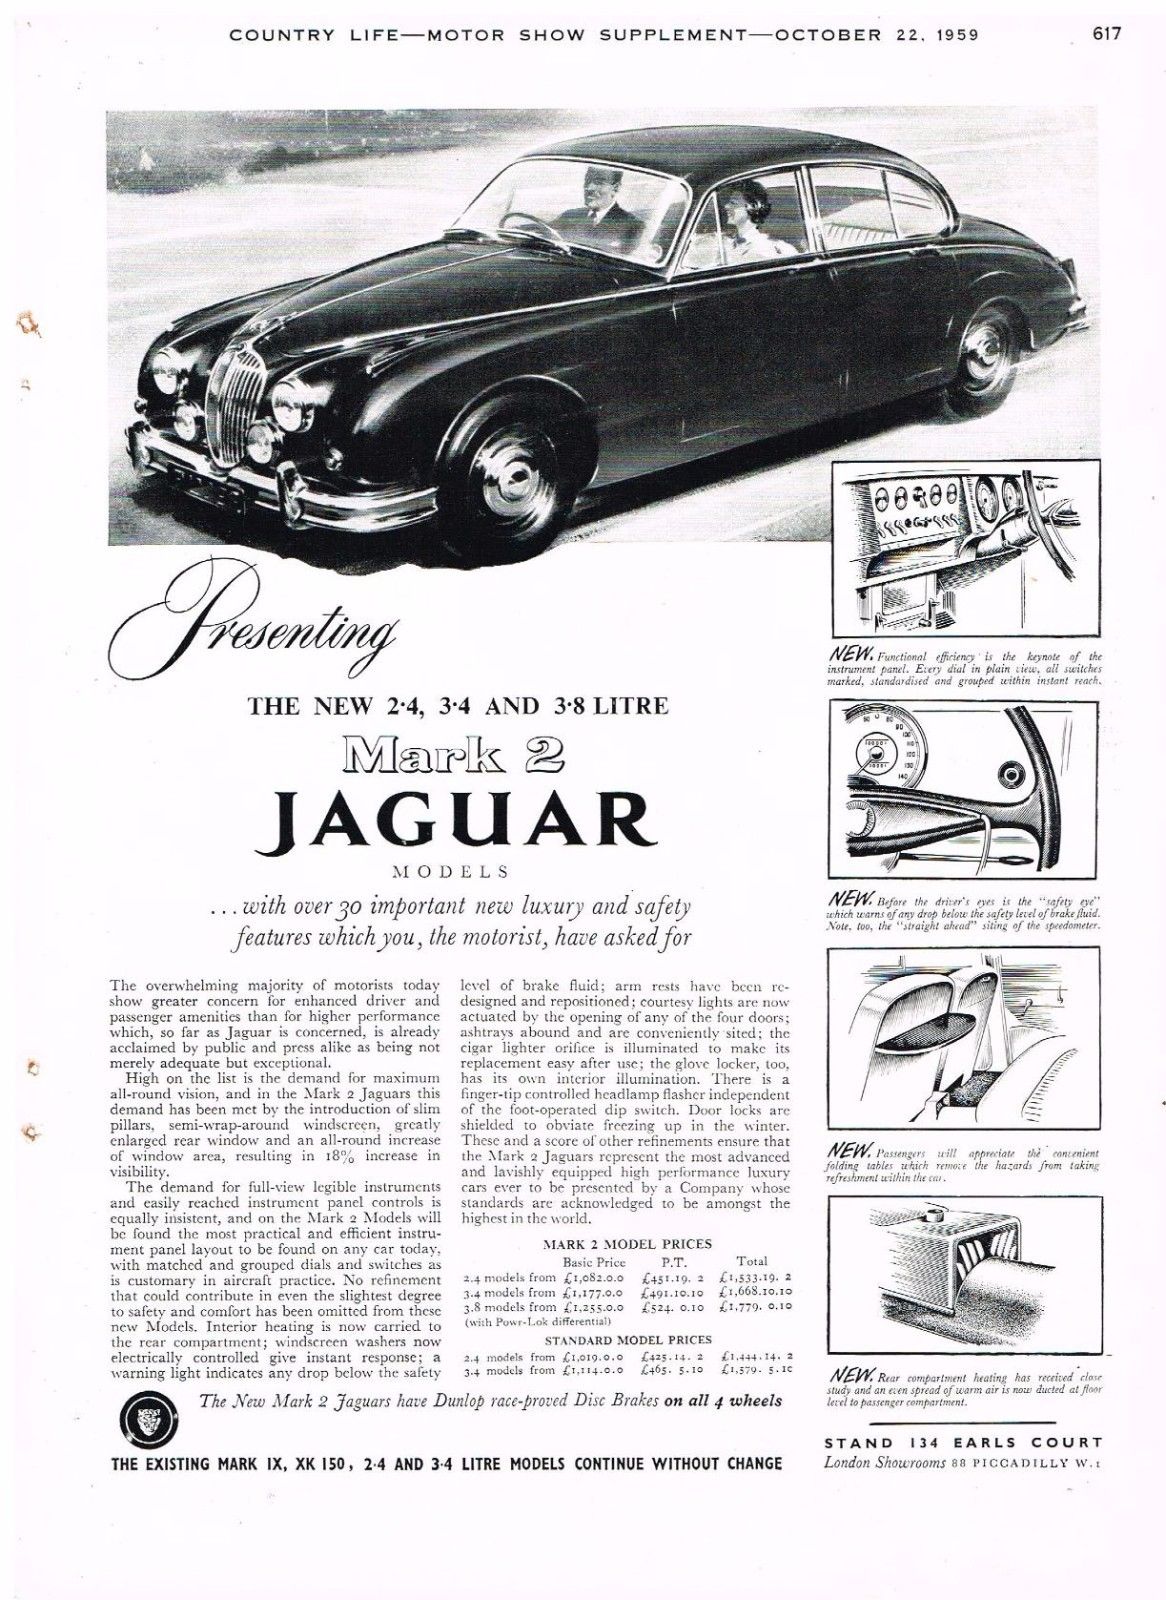 1959 British Car Advertisements